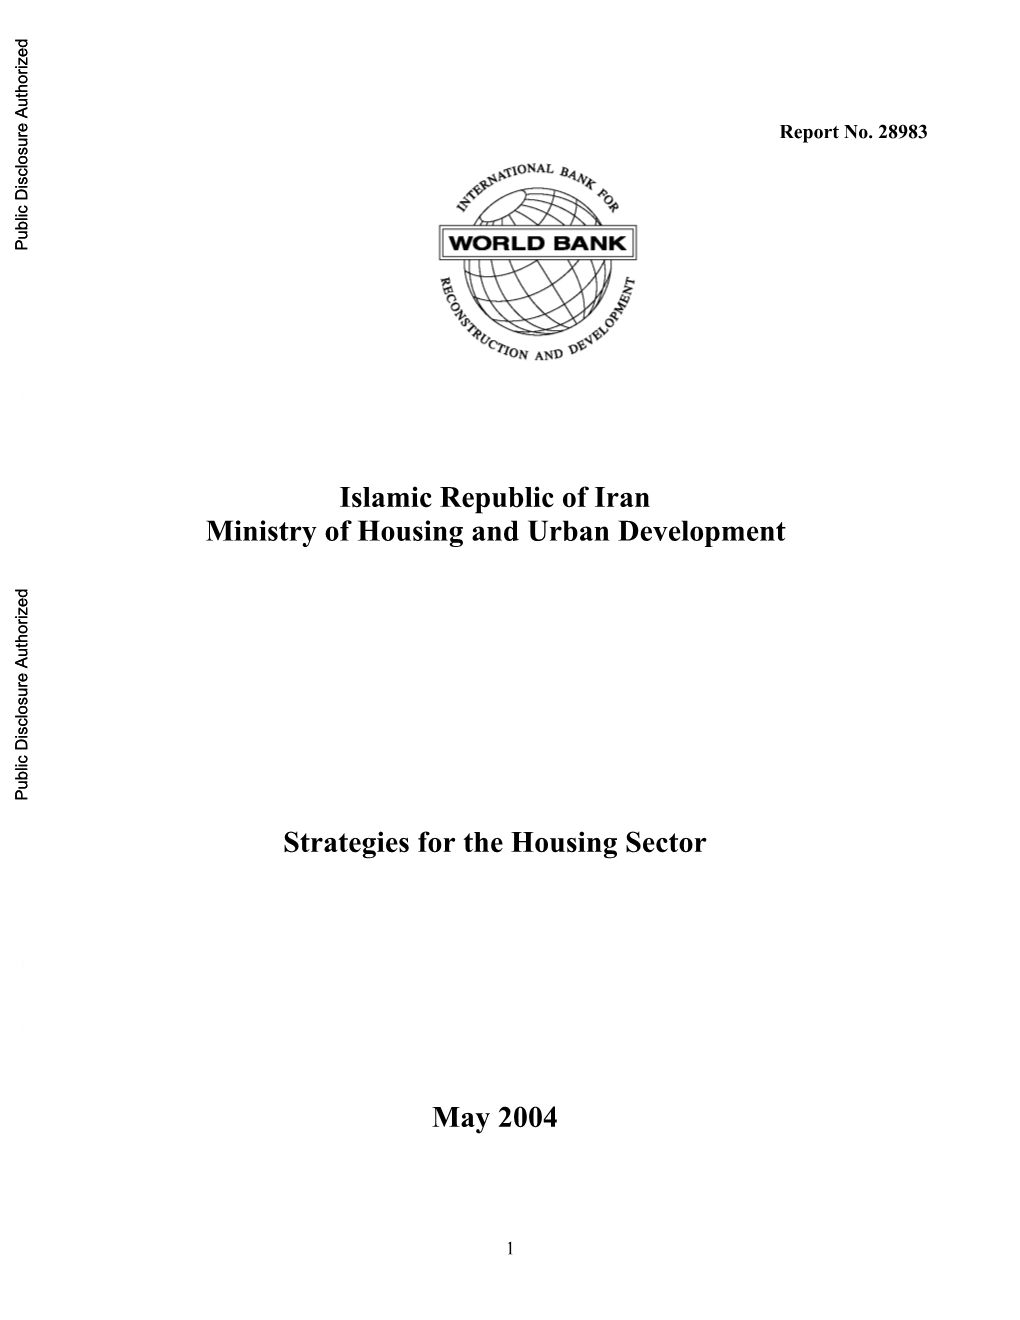 Annex 3.1. Description of Housing Programs in Iran